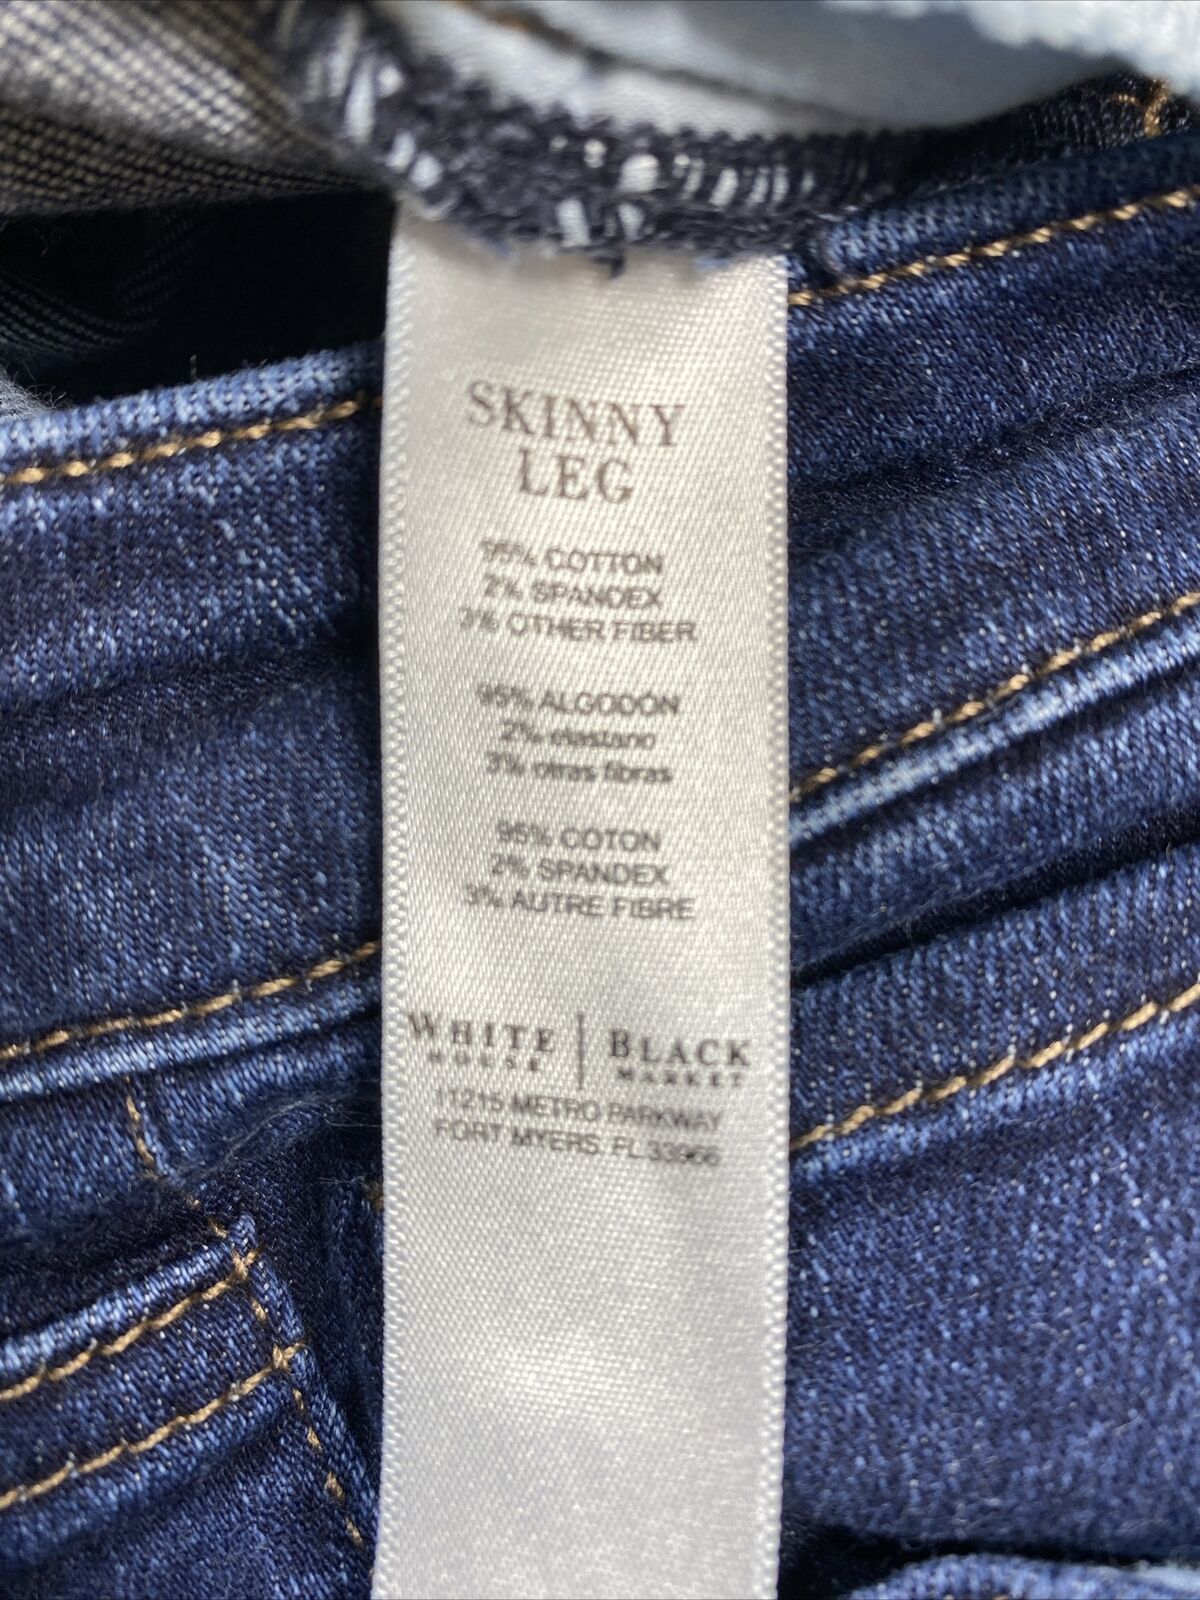 White House Black Market Jeans ajustados con lavado oscuro para mujer - 4 R